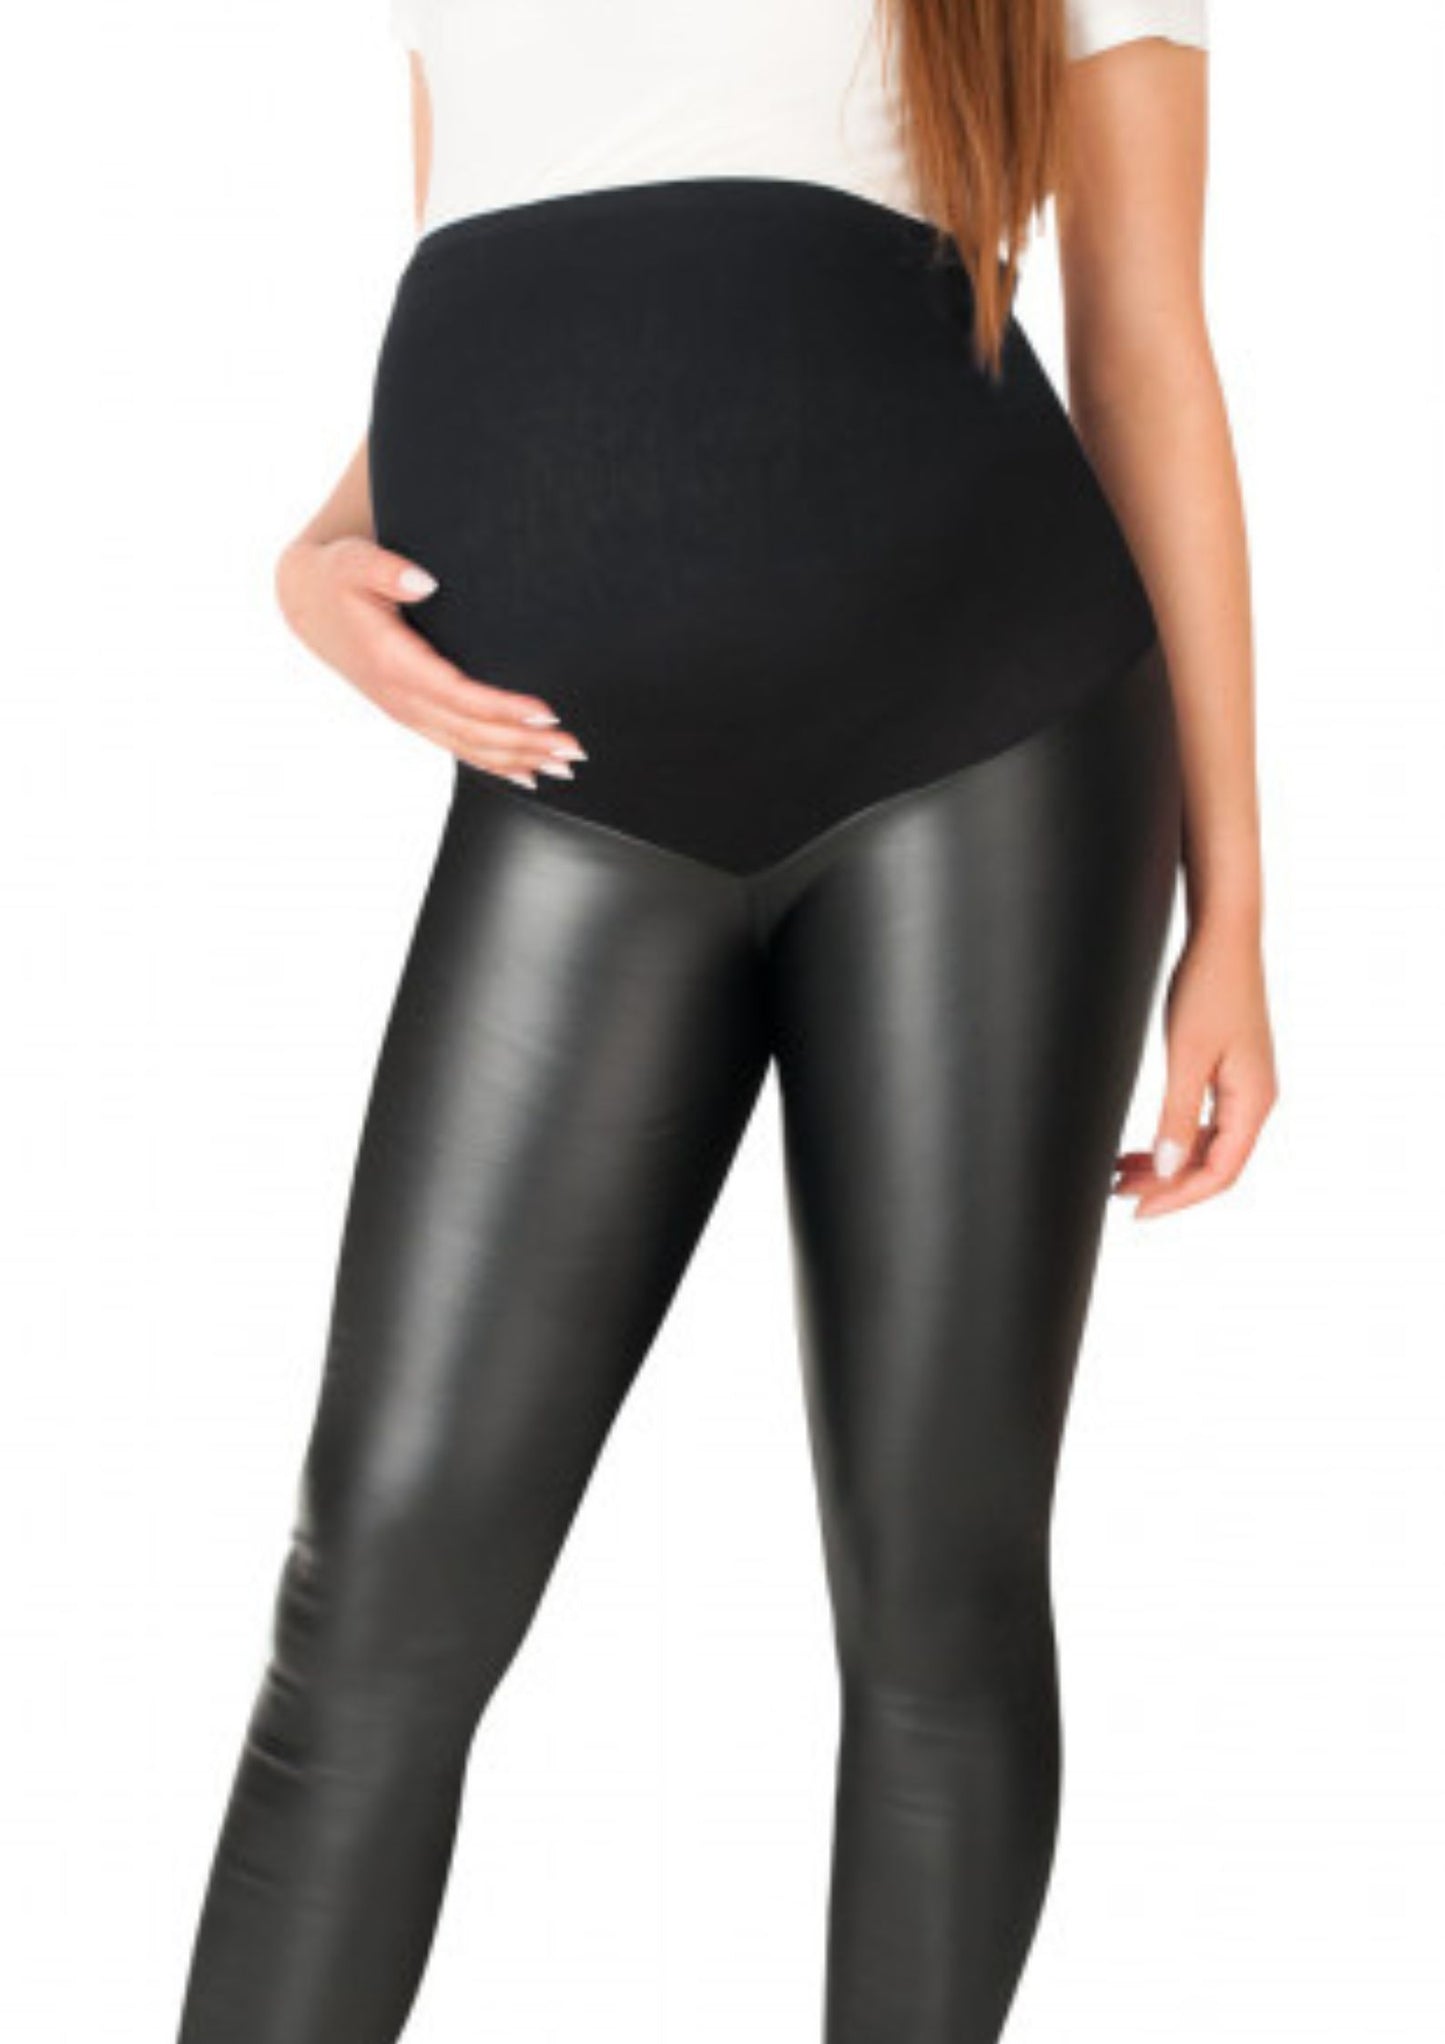 Latex maternity leggings